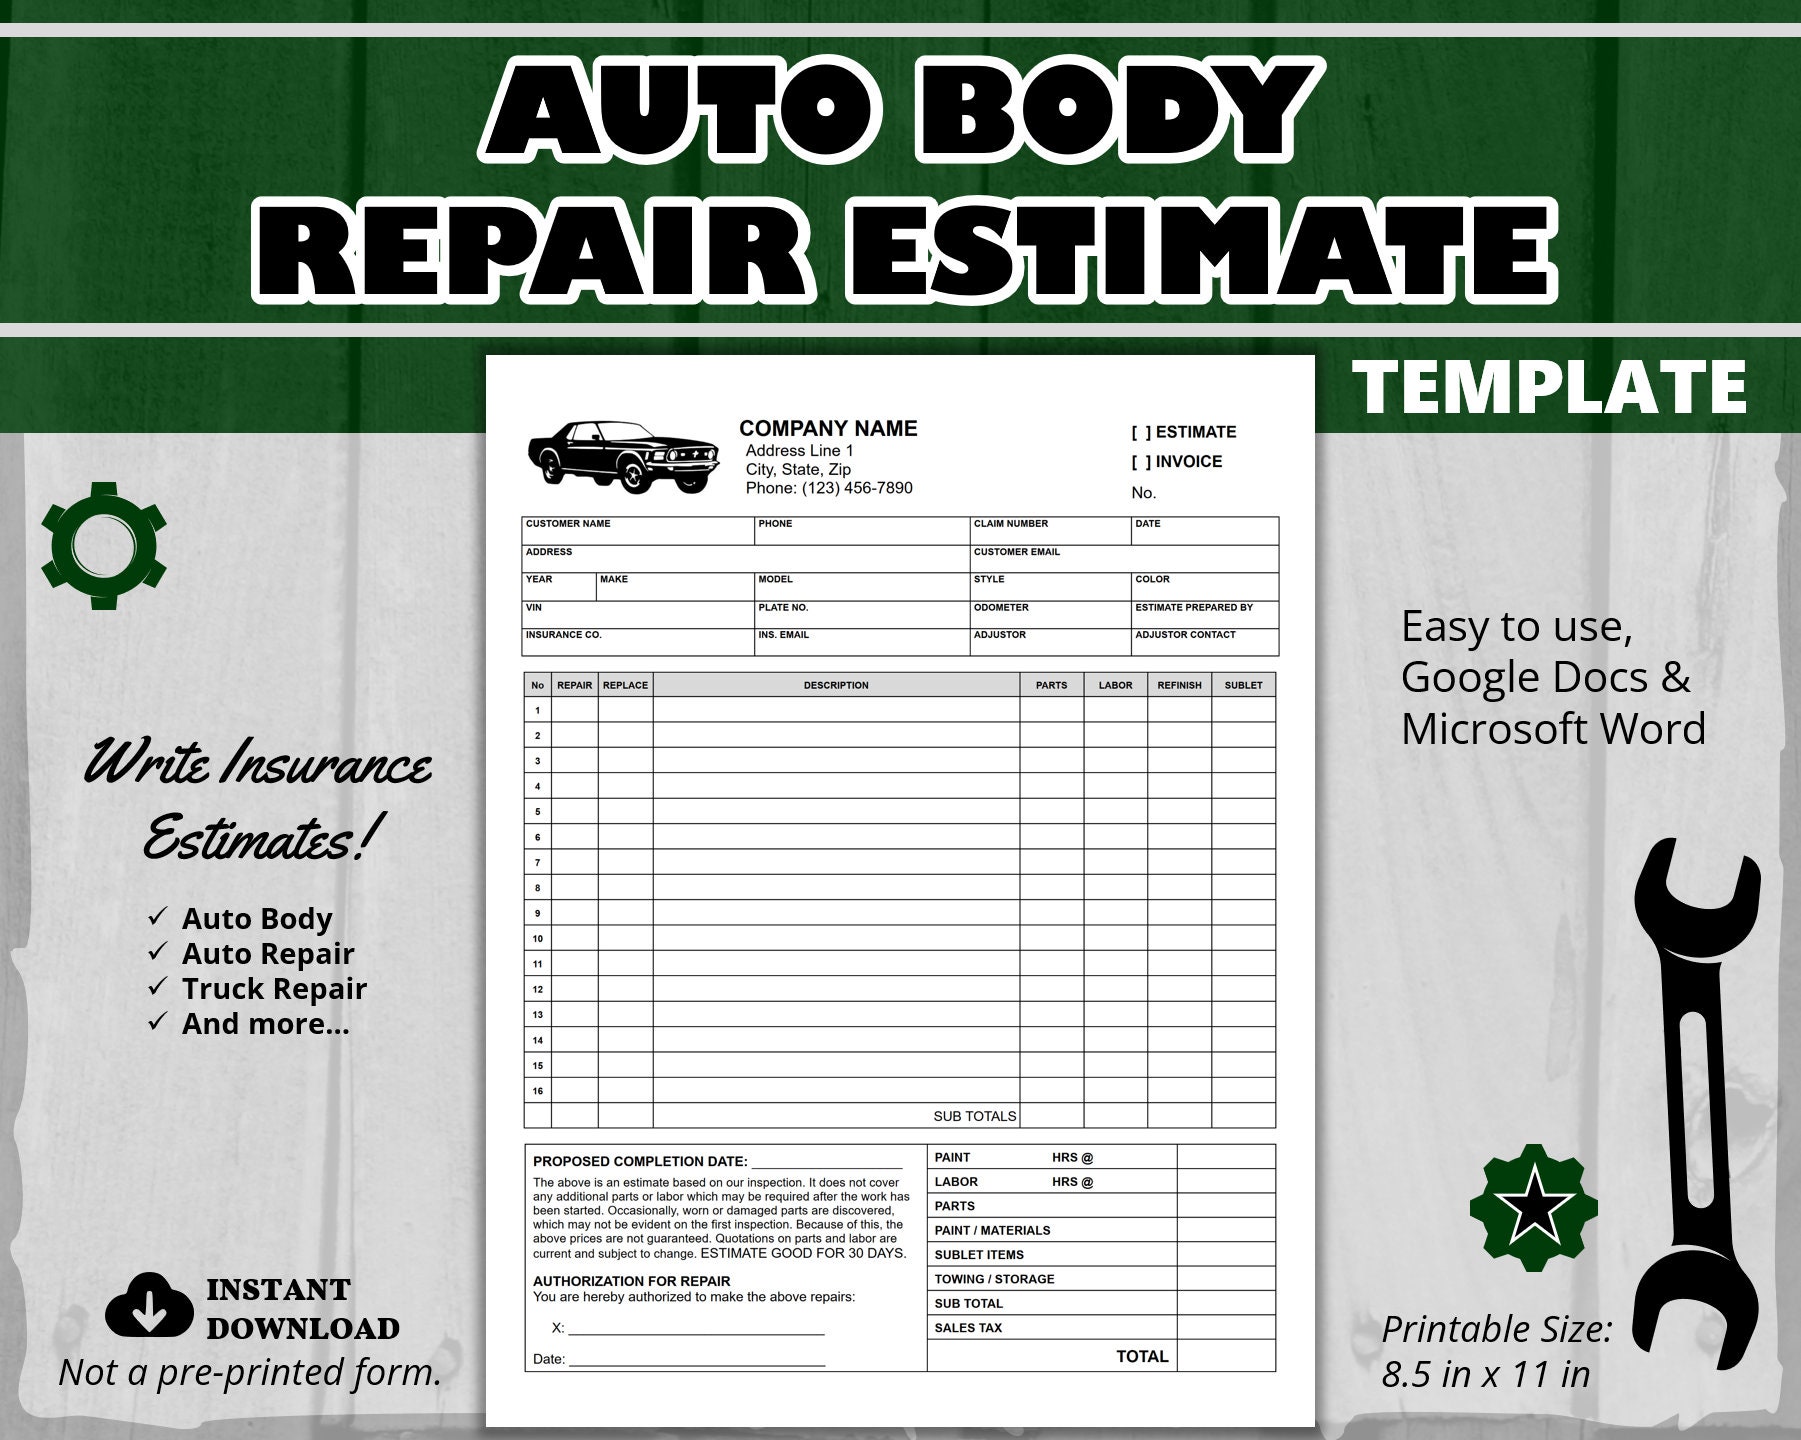 editable-auto-body-repair-estimate-template-word-google-etsy-australia